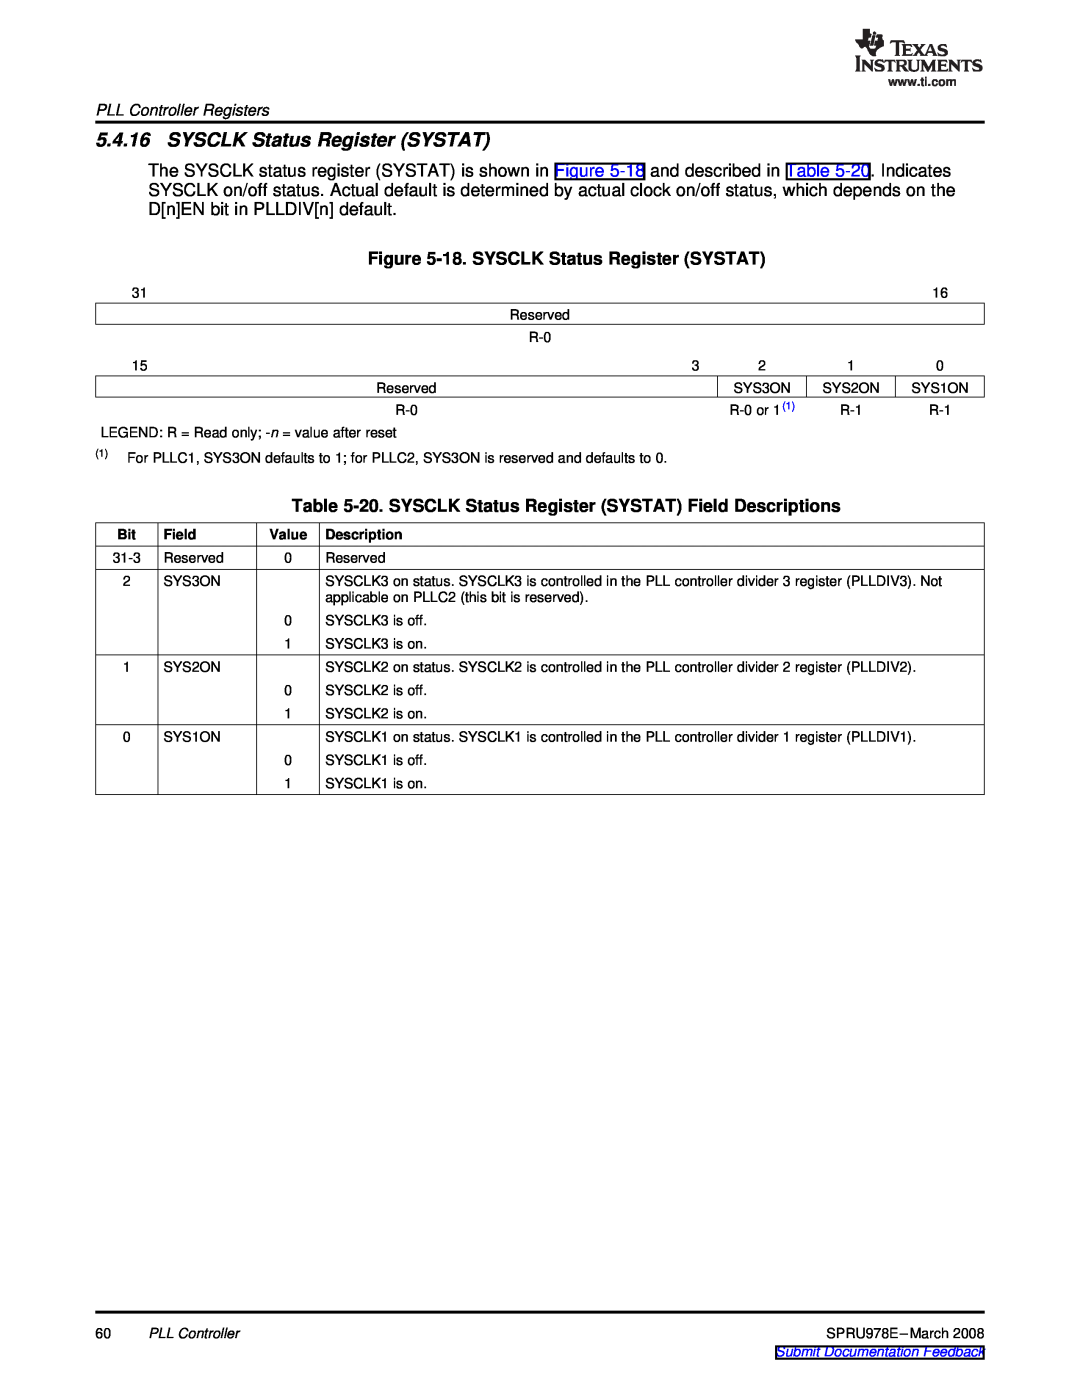 Texas Instruments TMS320DM643x 18. SYSCLK Status Register SYSTAT, 20. SYSCLK Status Register SYSTAT Field Descriptions 